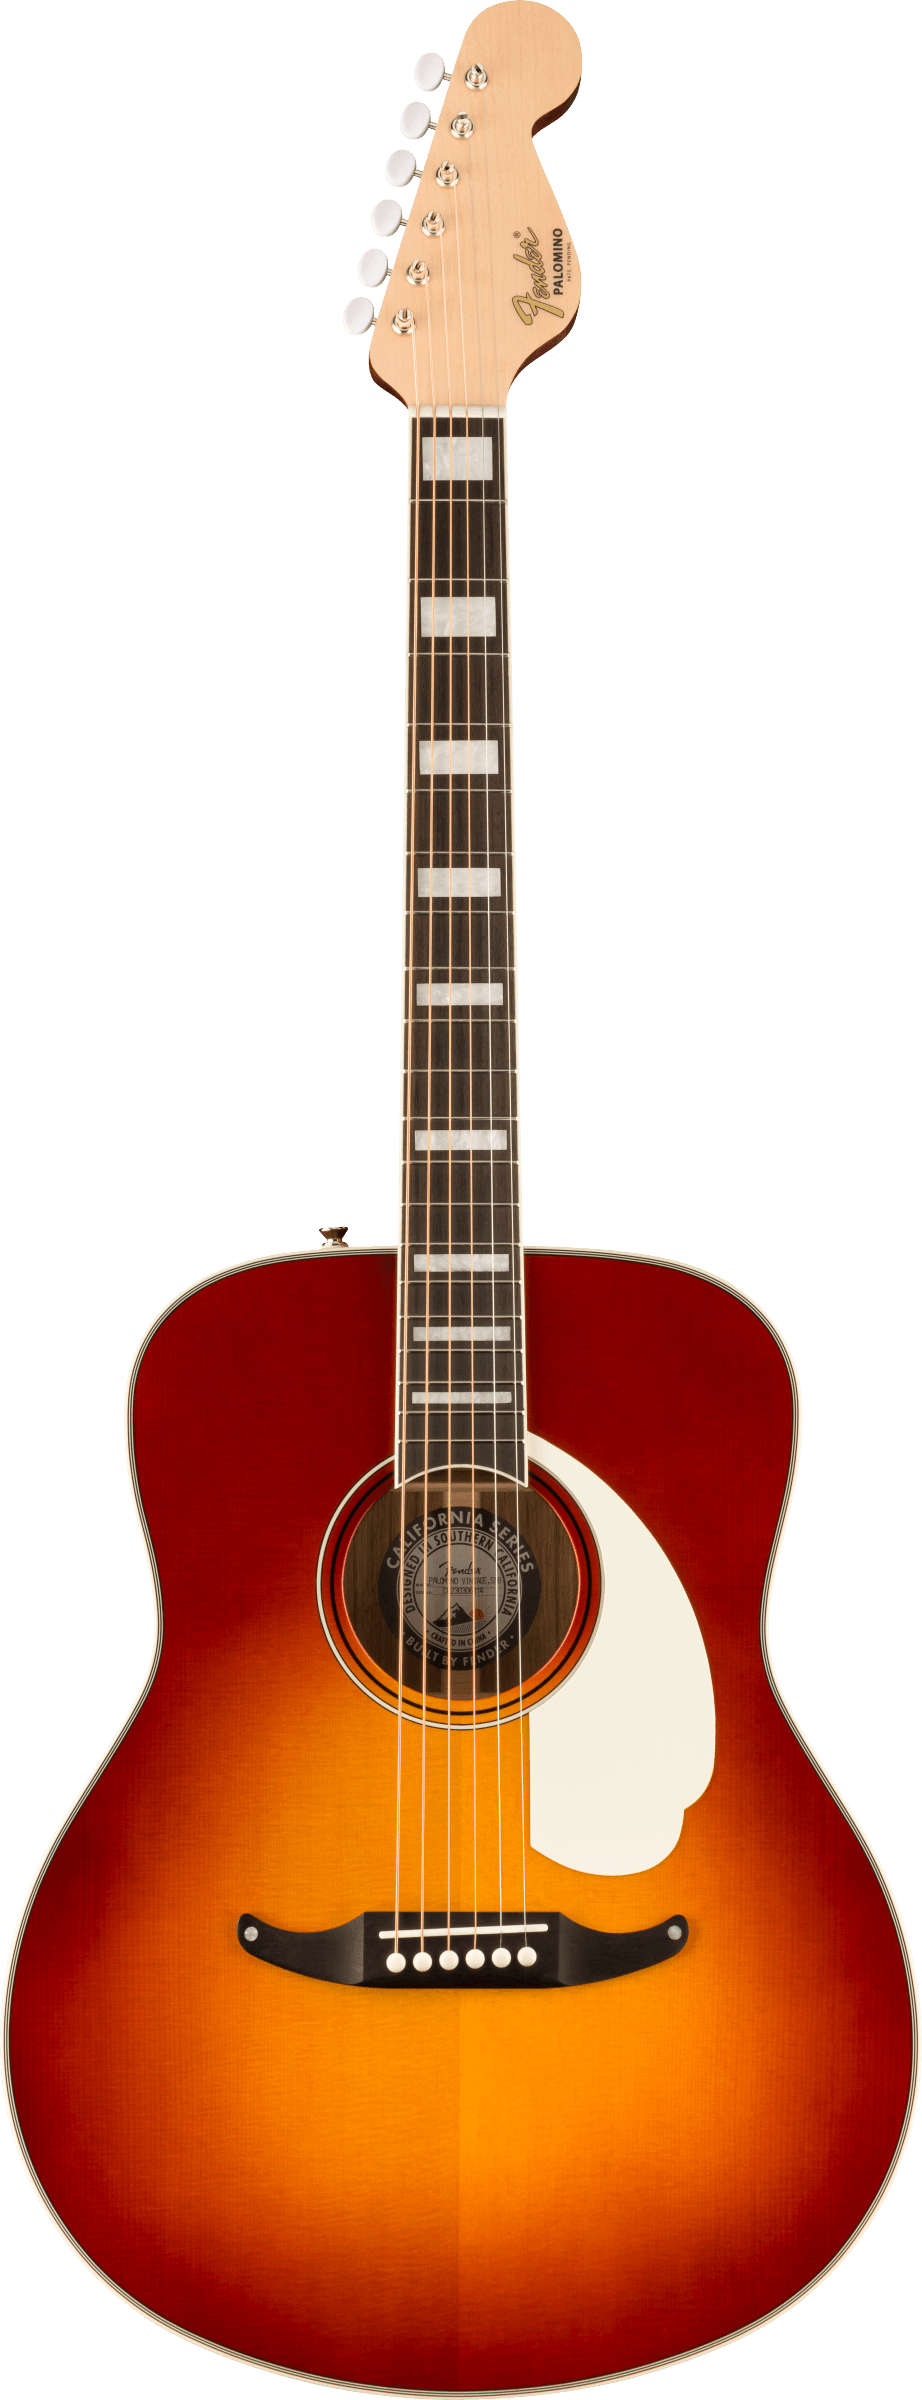 Fender Palomino Vintage Electro-Acoustic Guitar, Sienna Sunburst (NEW)